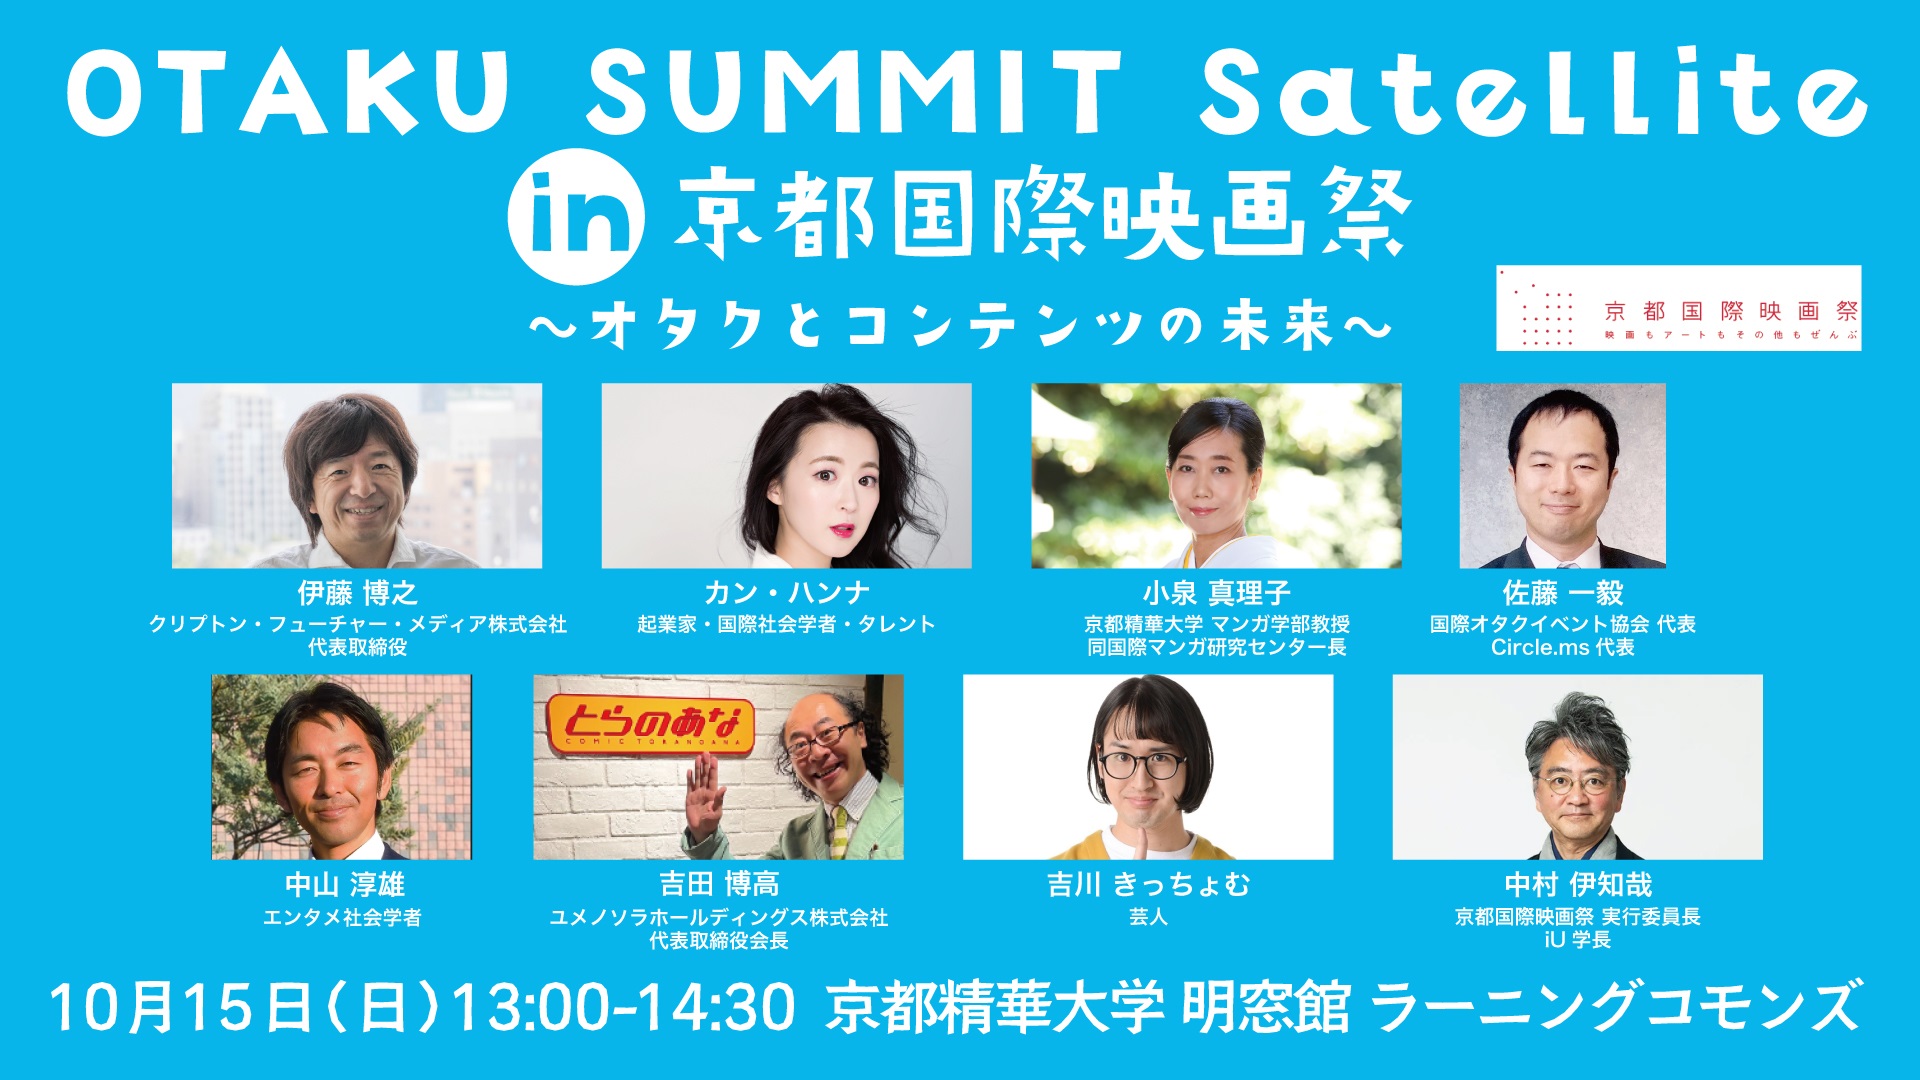 OTAKU SUMMIT Satellite in KYOTO INTERNATIONAL FILM AND ART FESTIVAL - The Future of OTAKU and Contents 